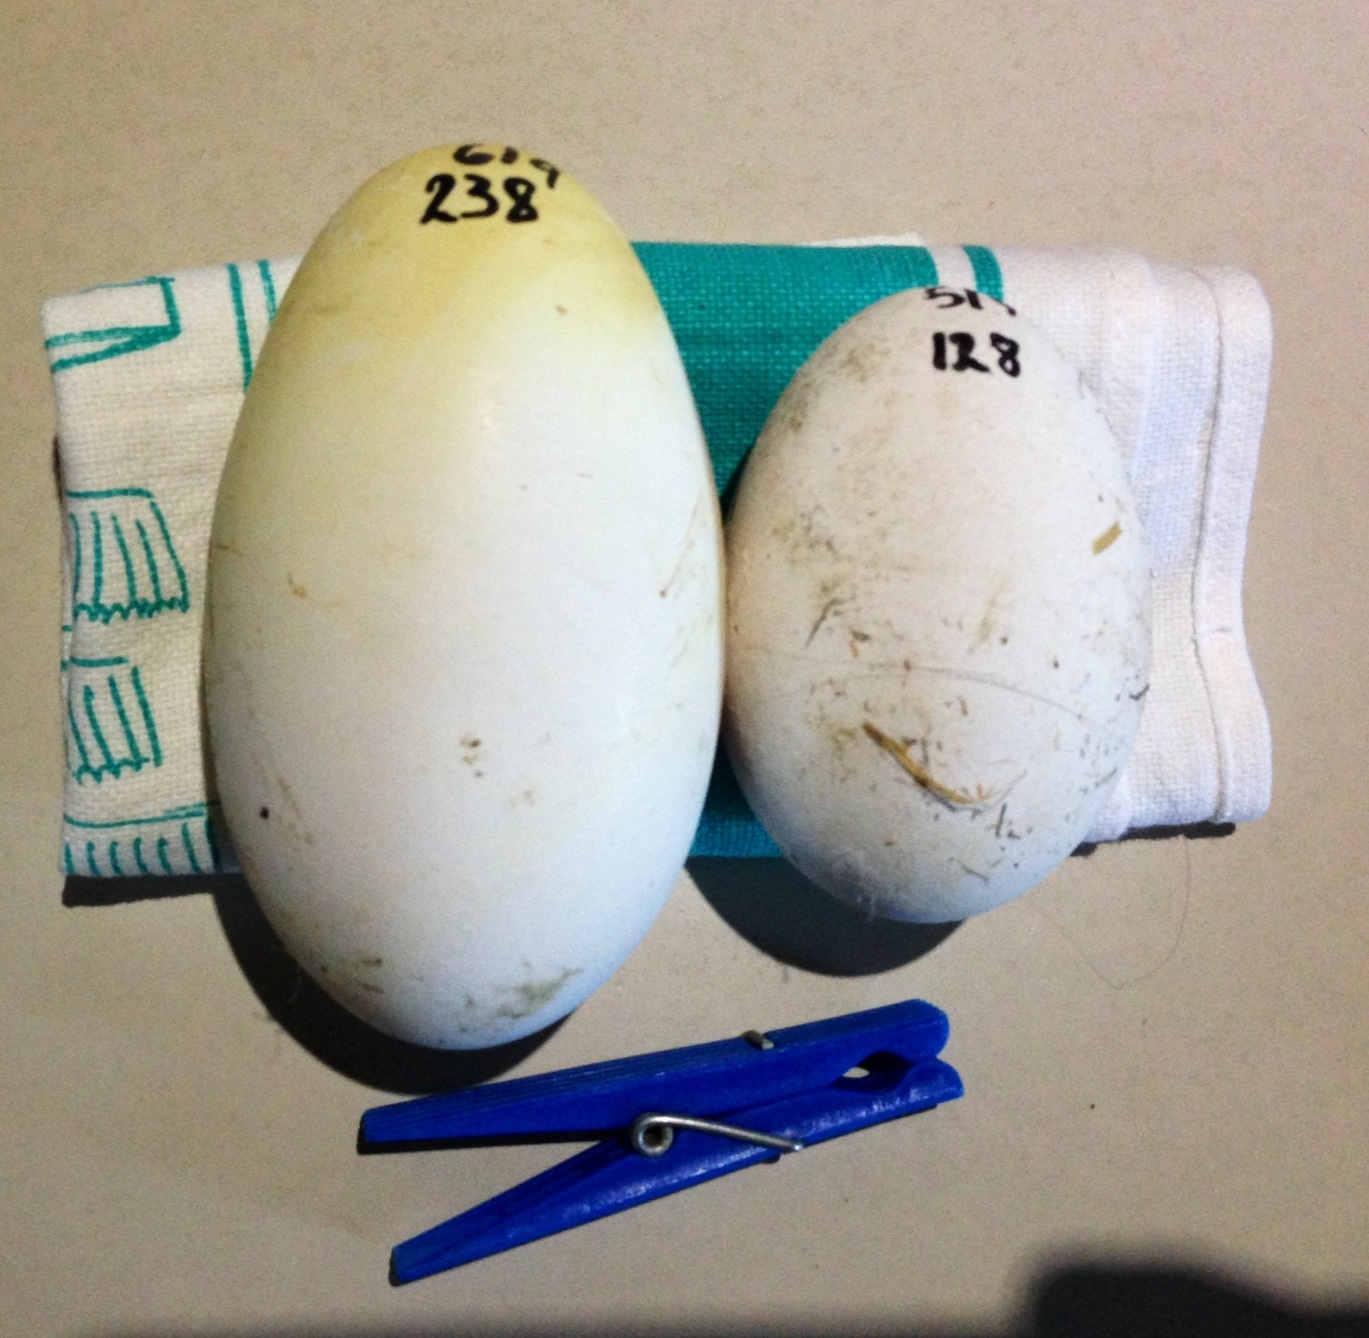 238 gram and 128 gram geese eggs